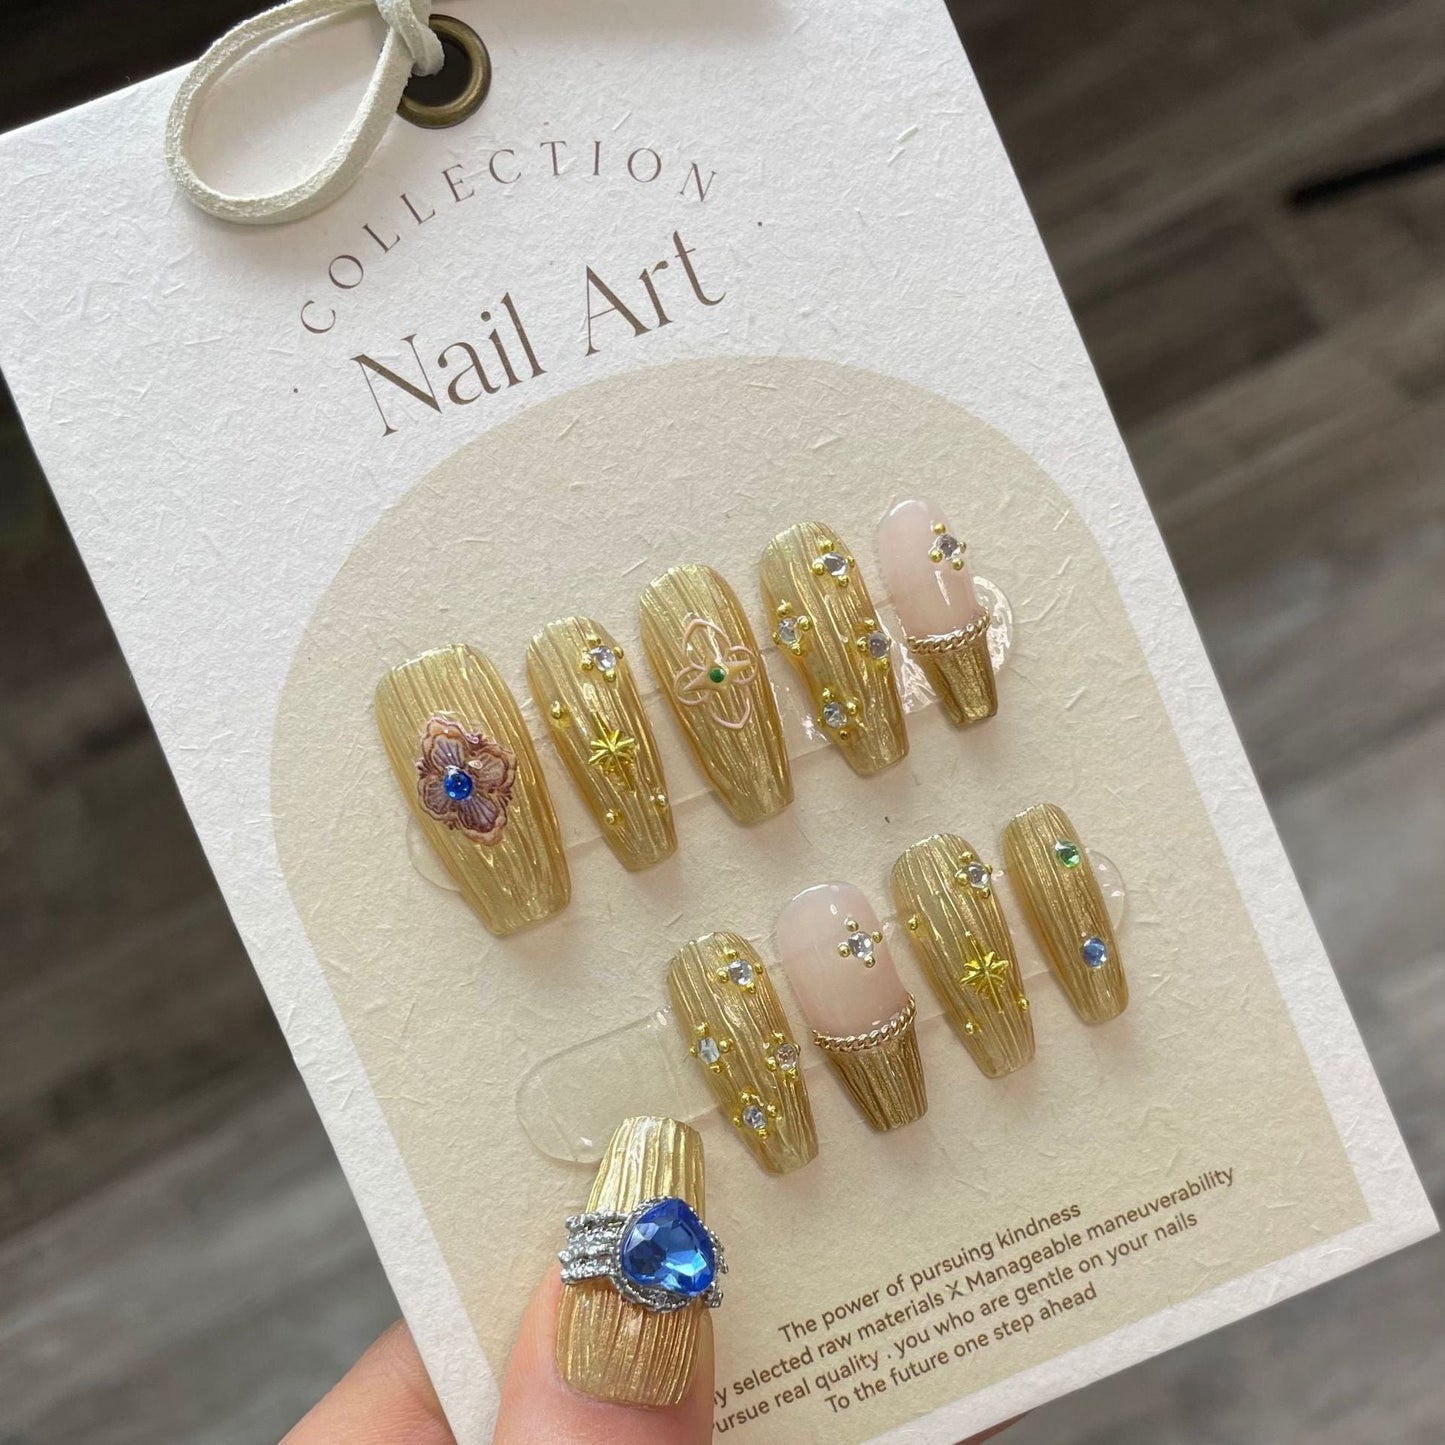 765 BUCCELLATI style press on nails 100% handmade false nails golden